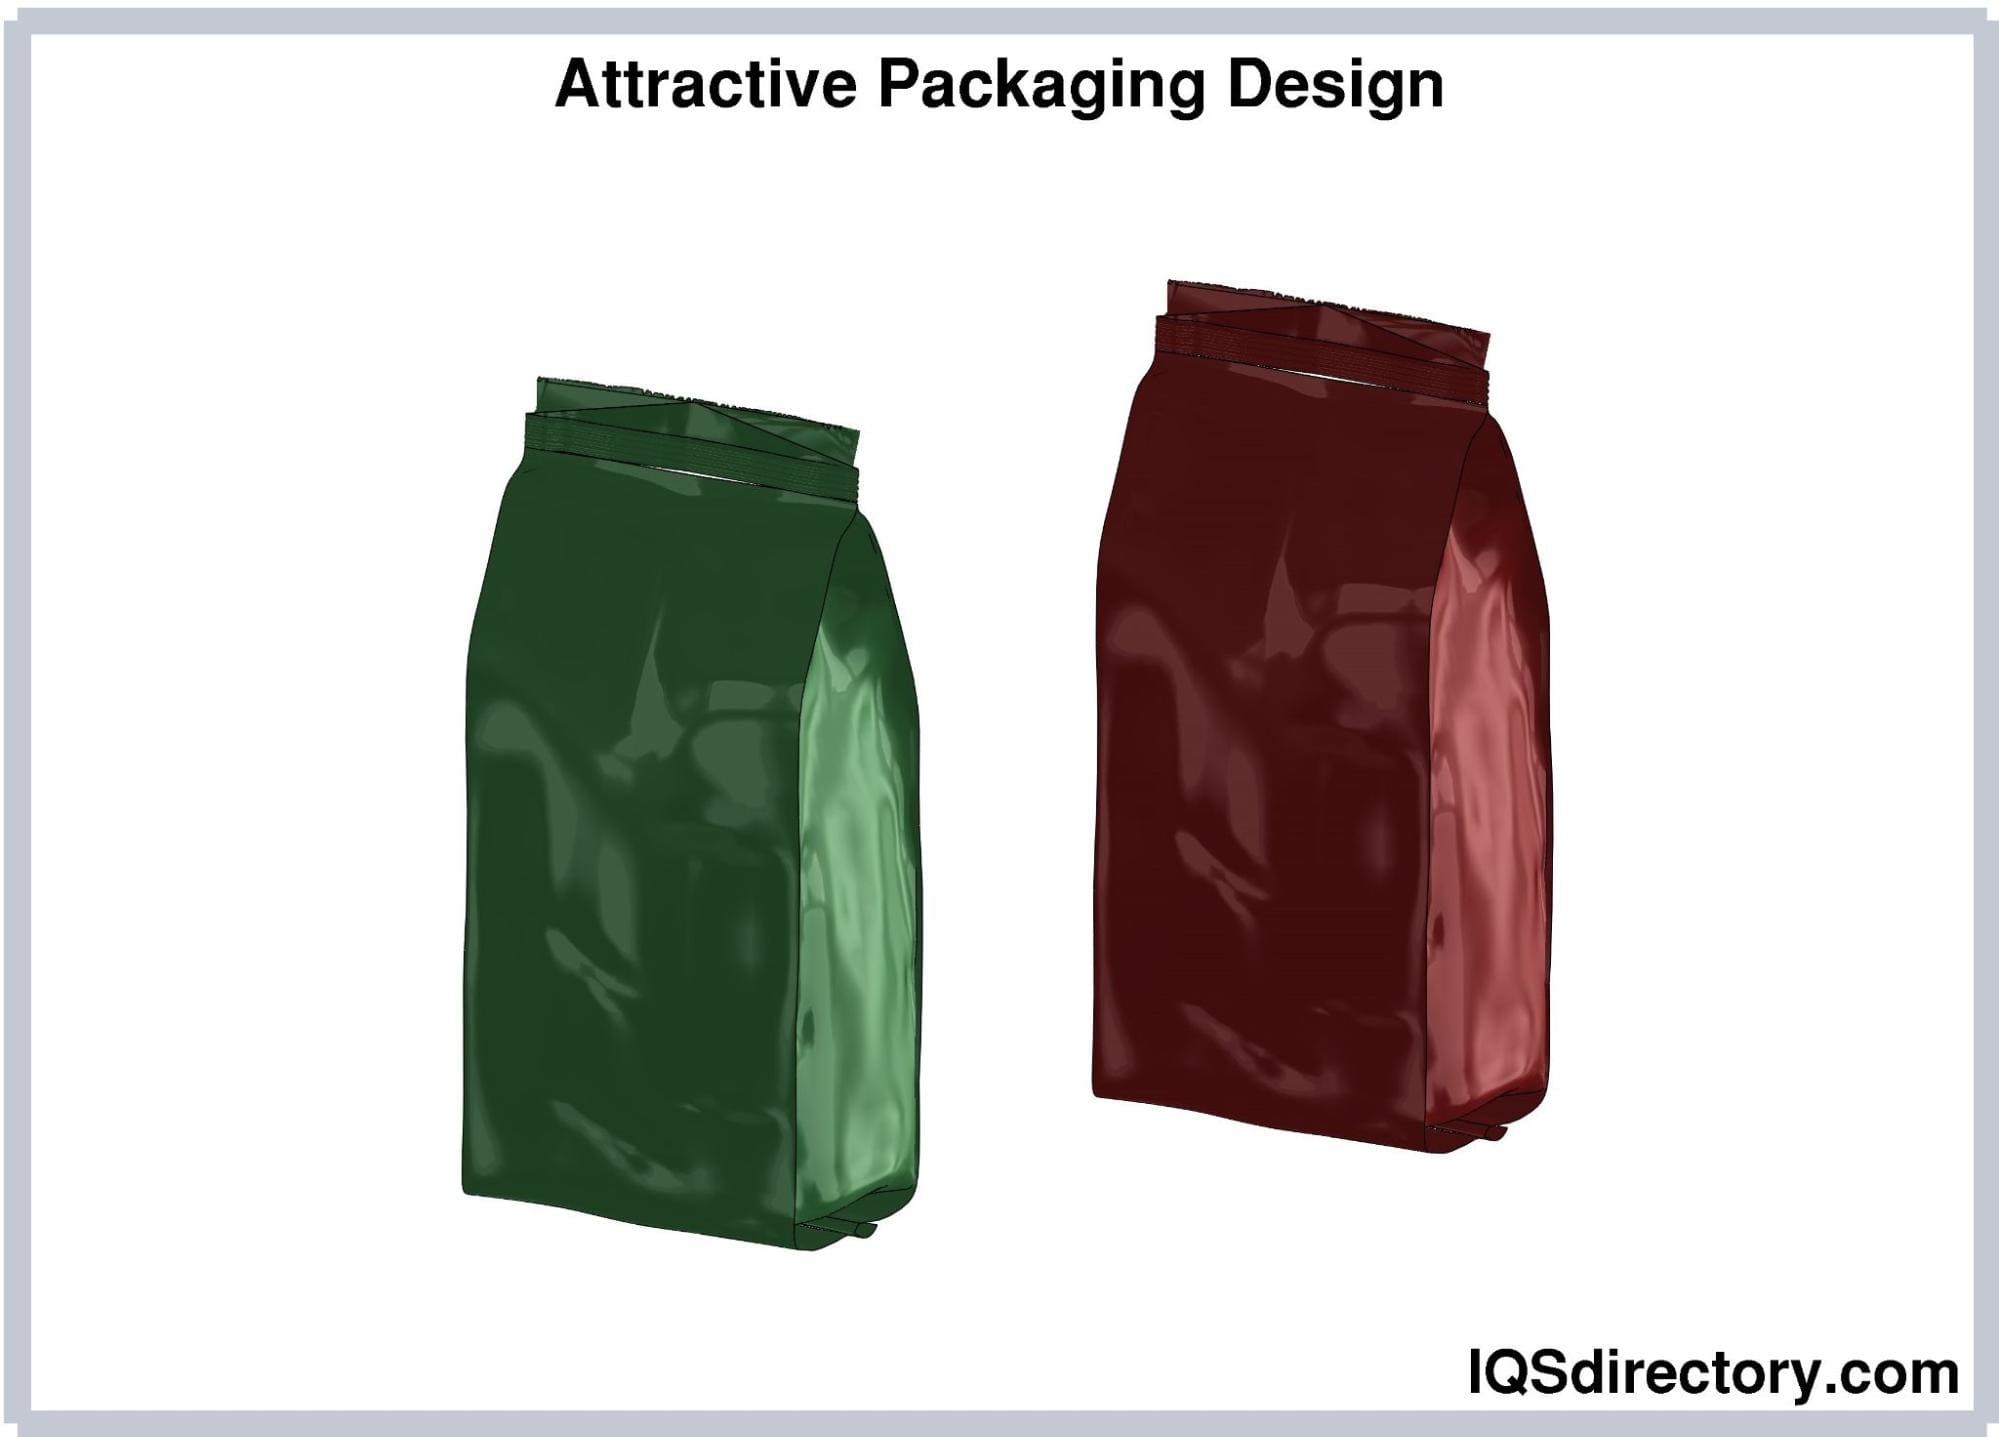 Attractive Packaging Design